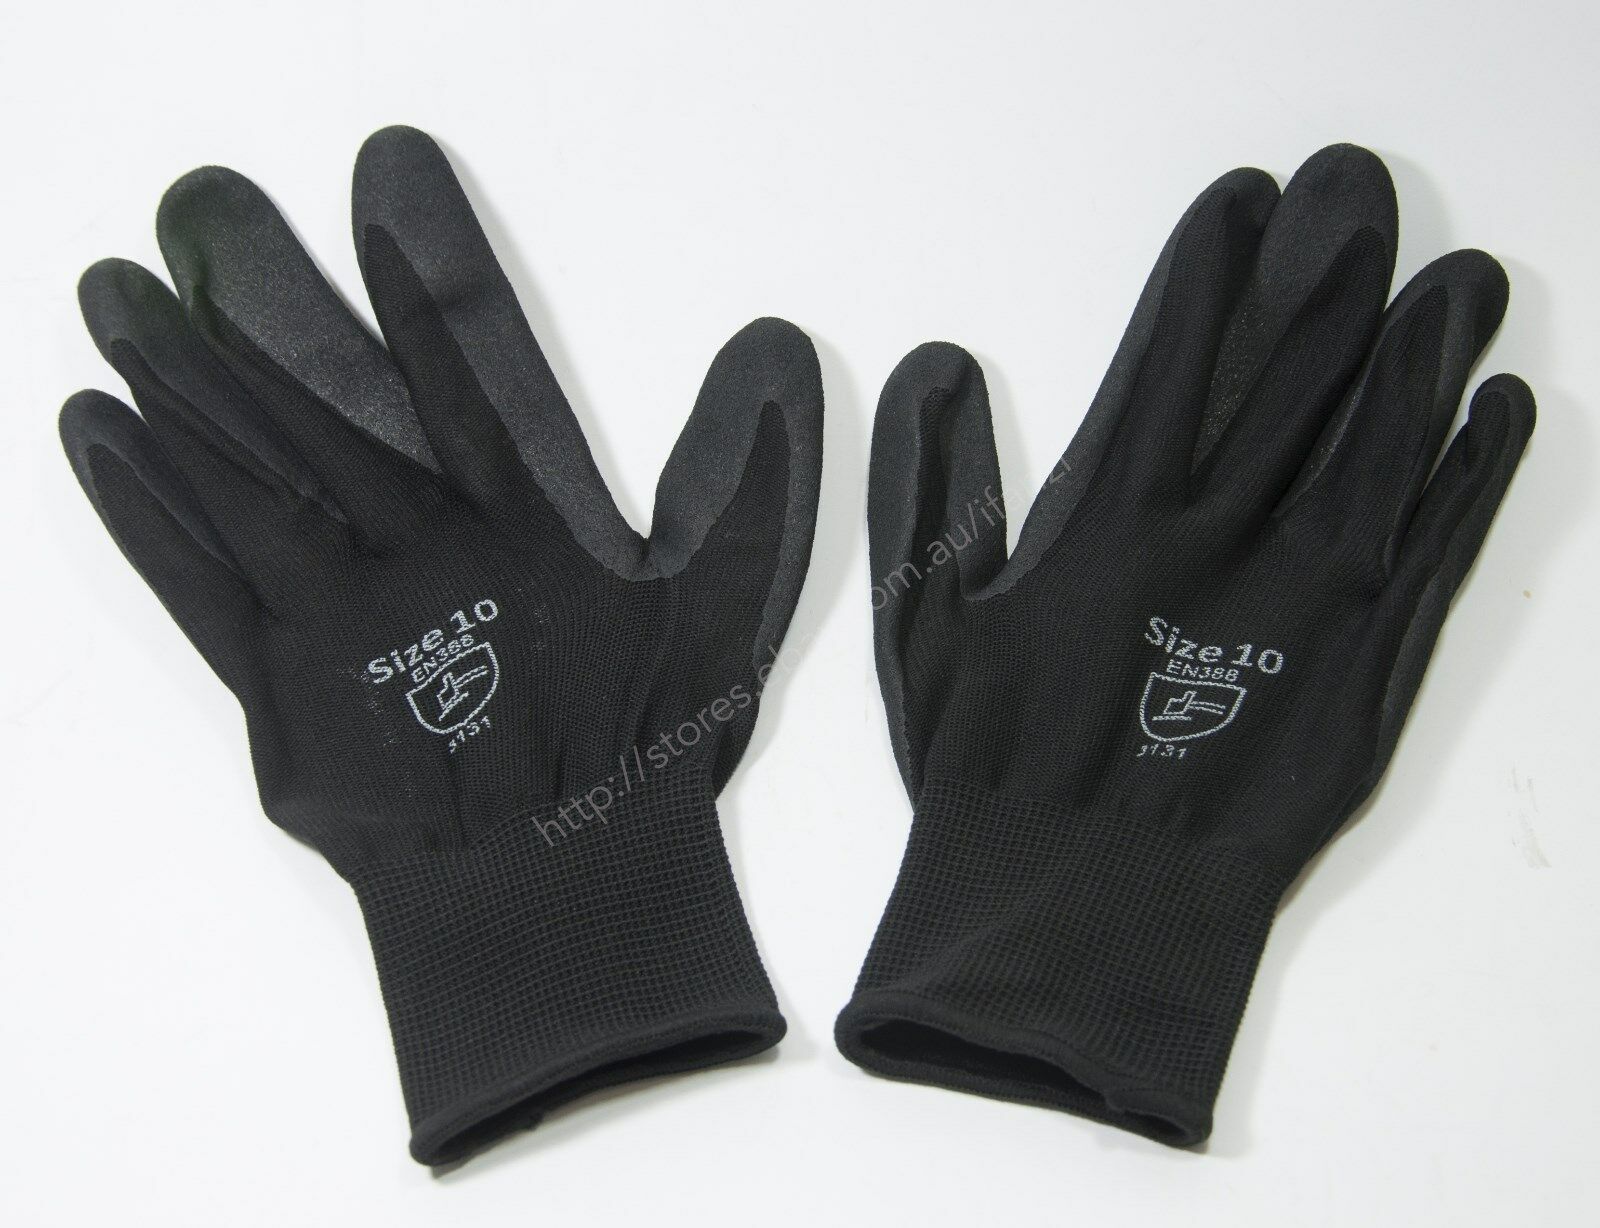 AUSTORE Nitrile Gloves Sandy Finished Size 10 8243